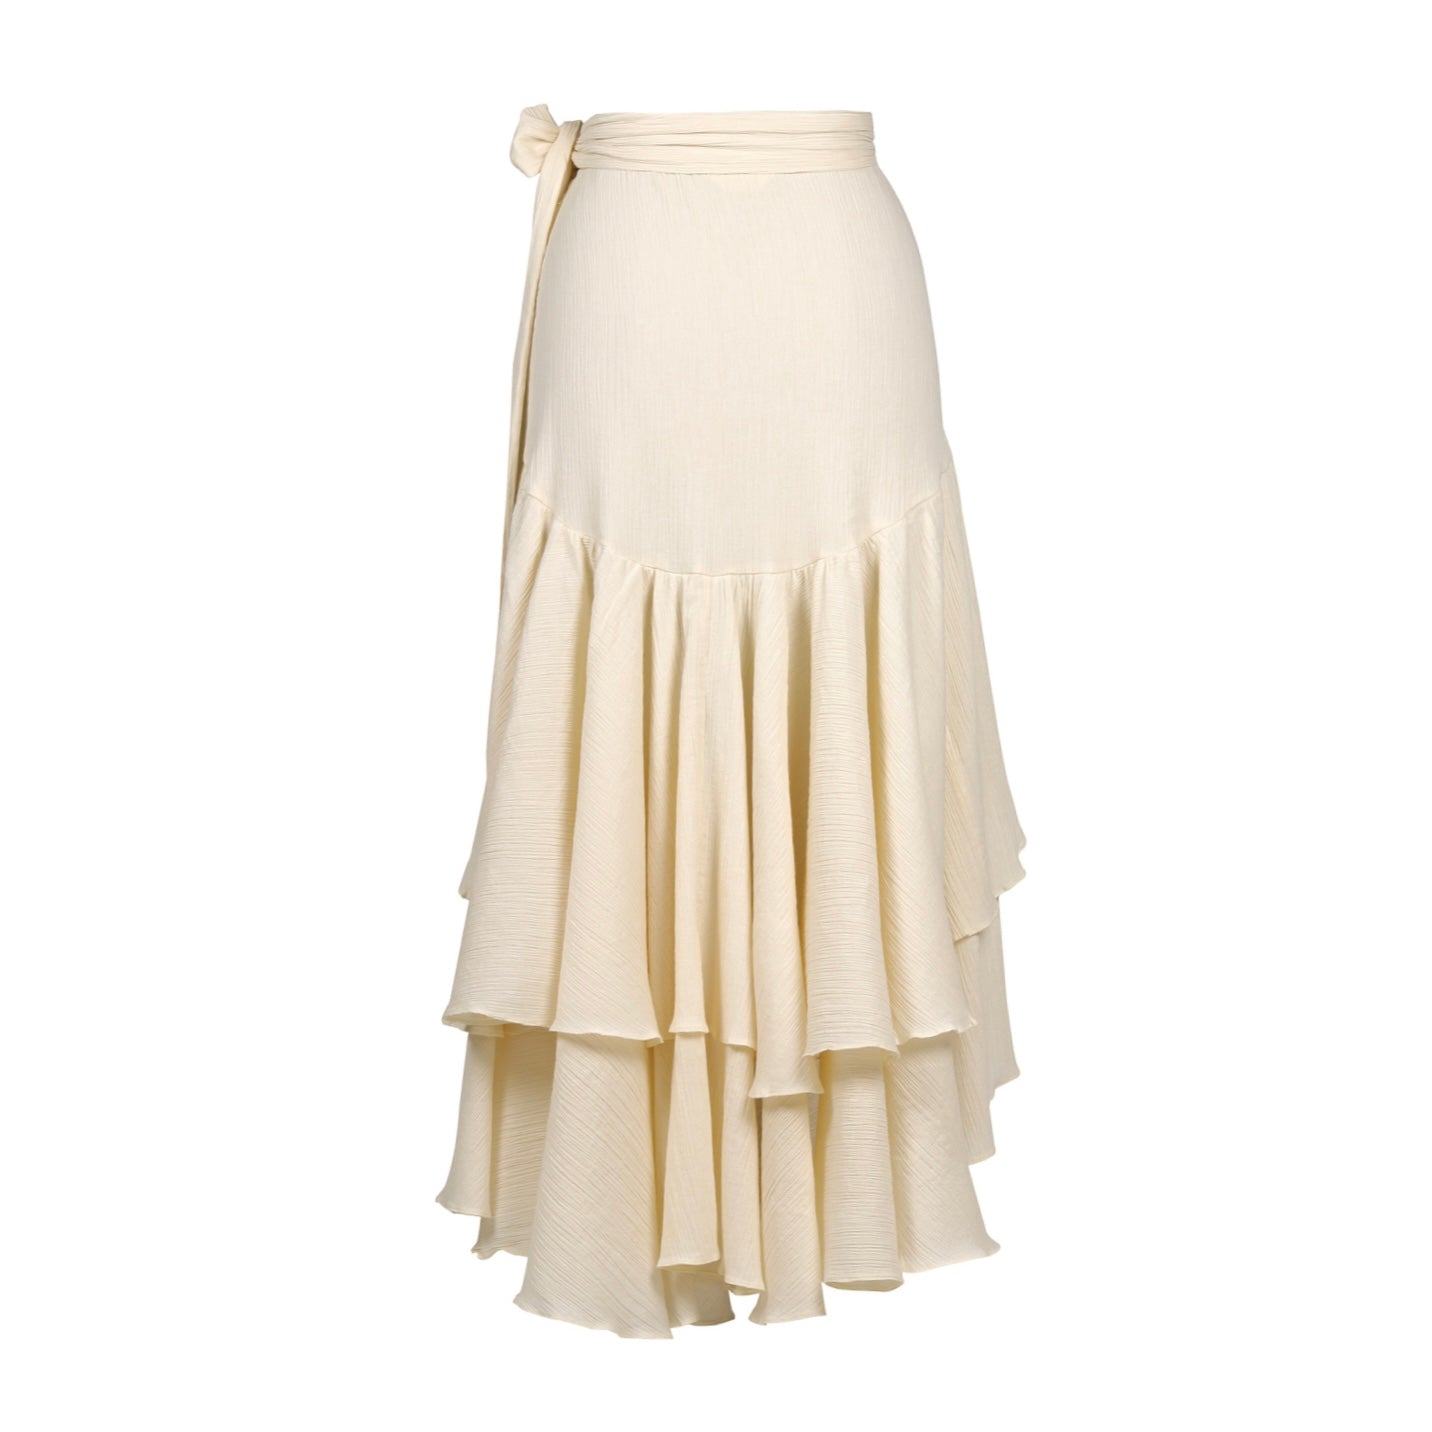 gabriela skirt in cream